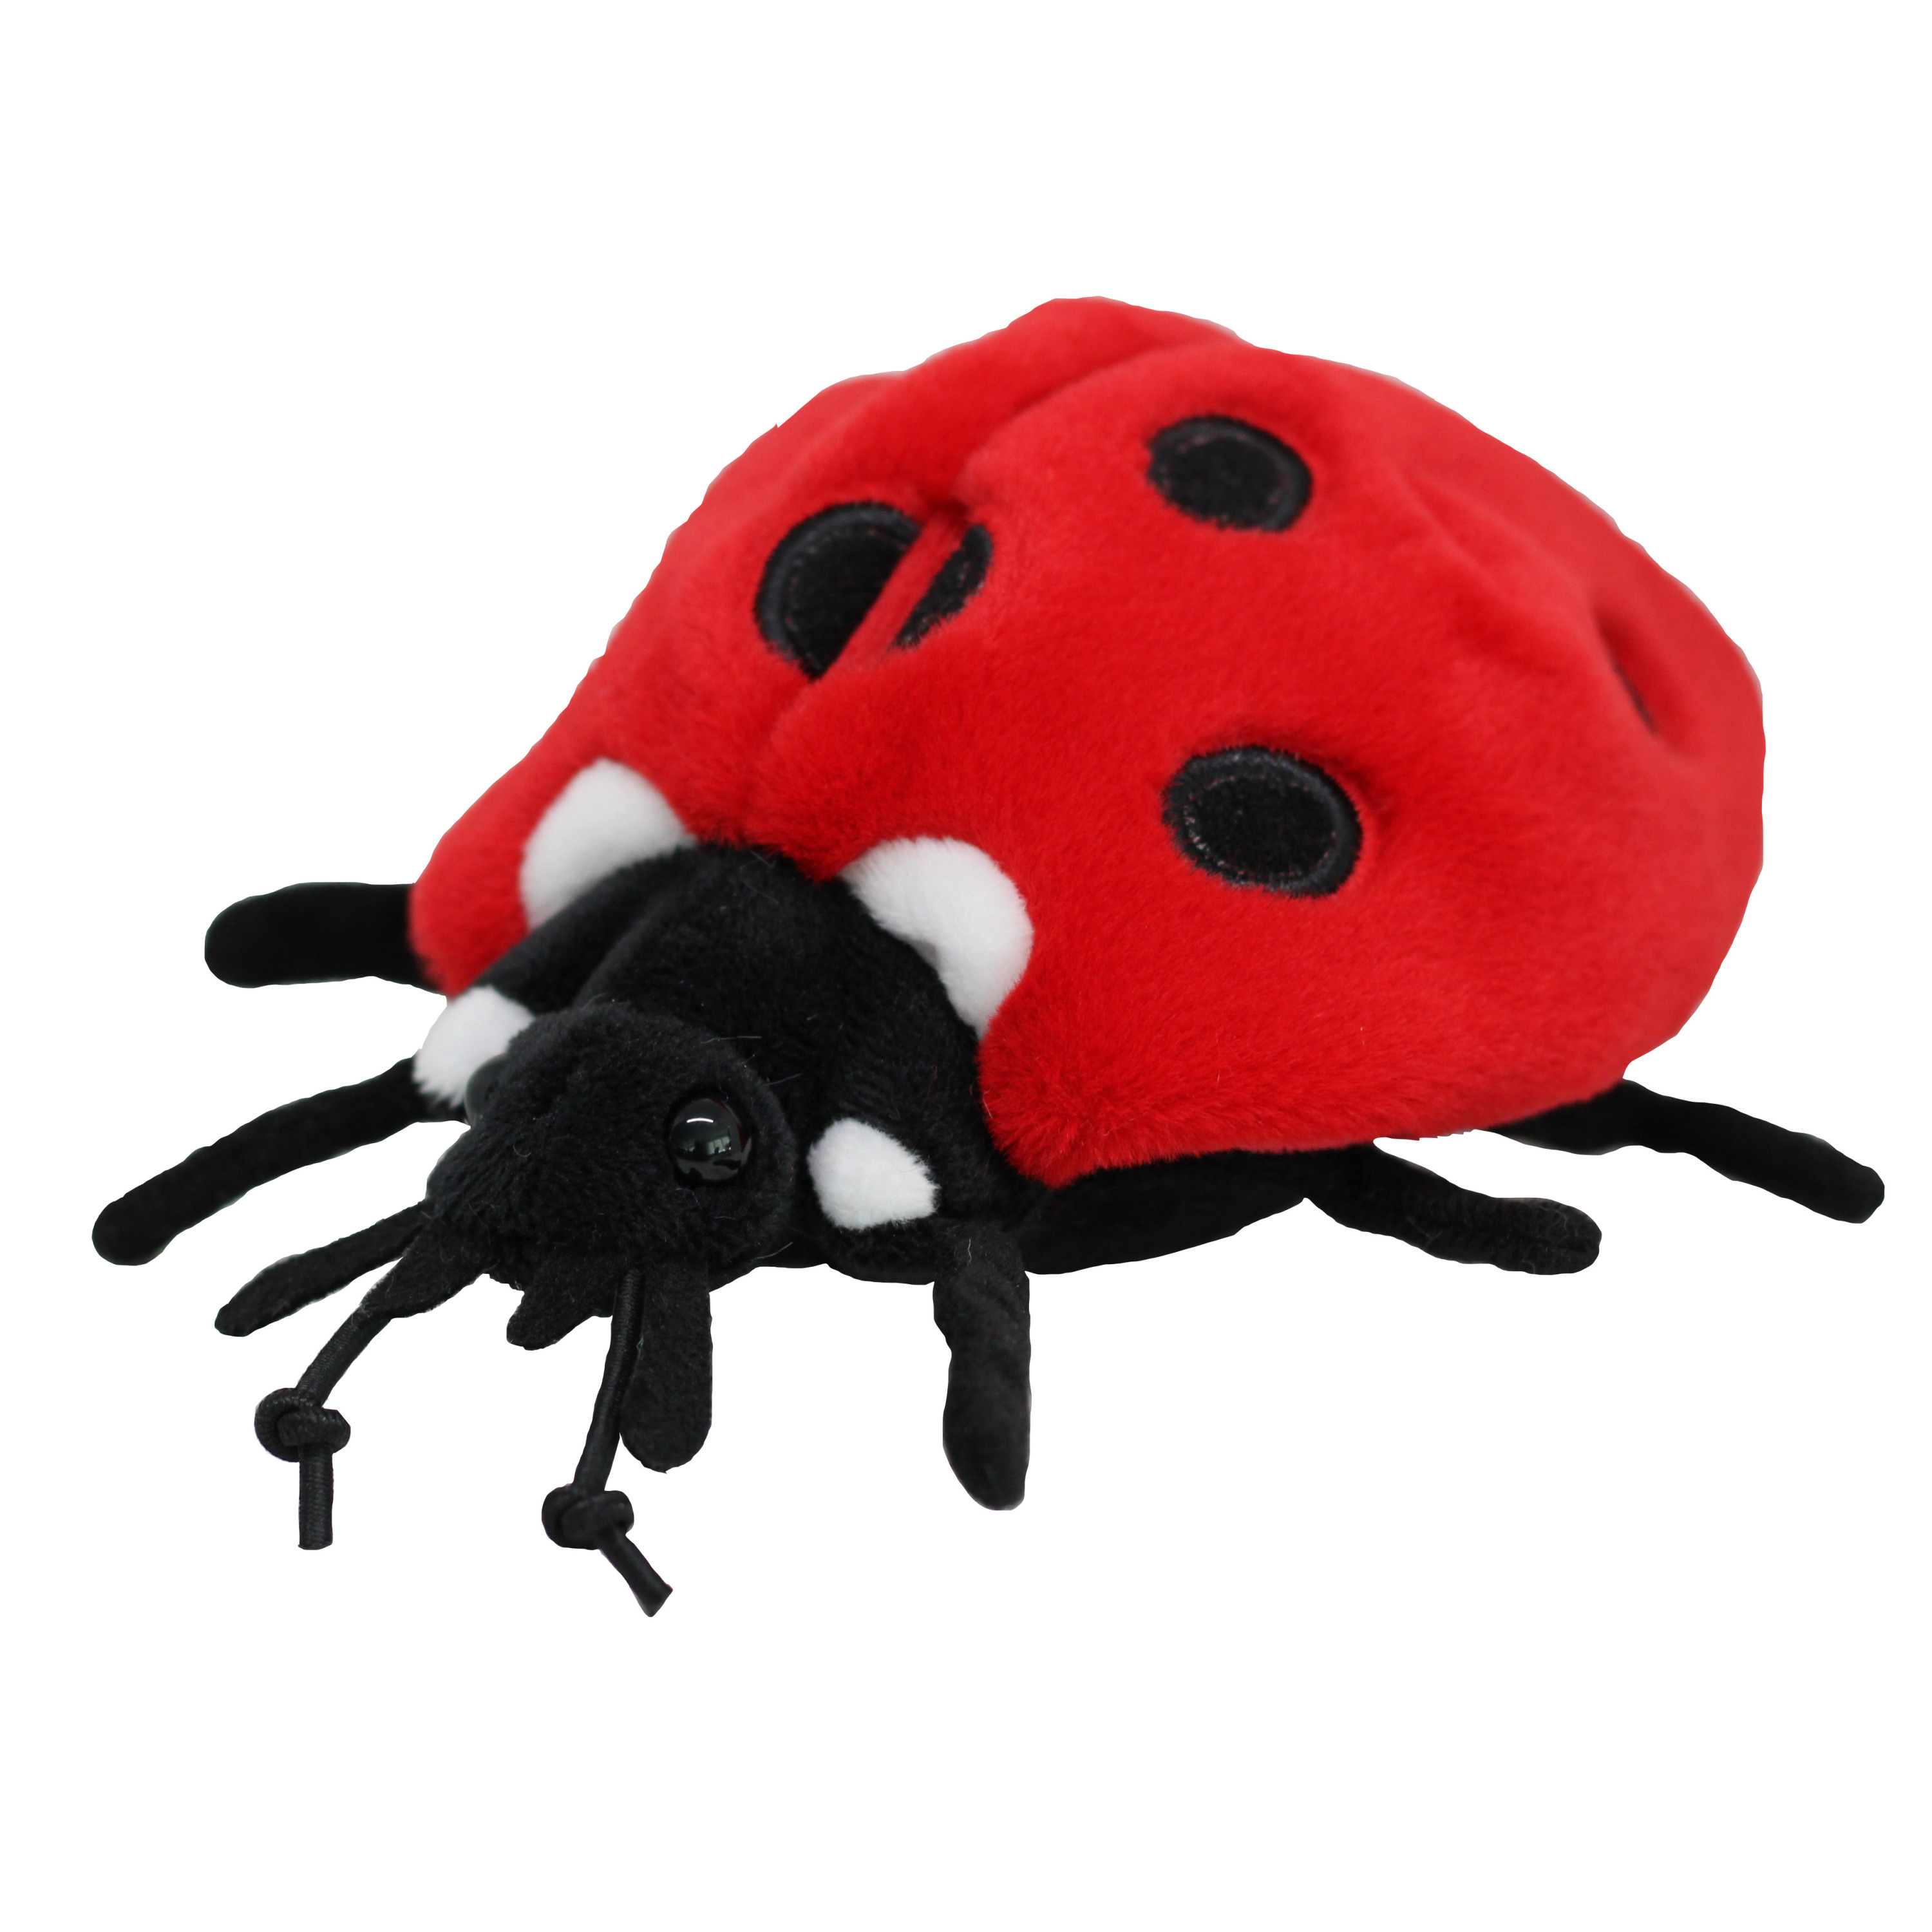 Nature Planet Knuffeldier Lieveheersbeestje pluche stof premium knuffels rood zwart 15 cm